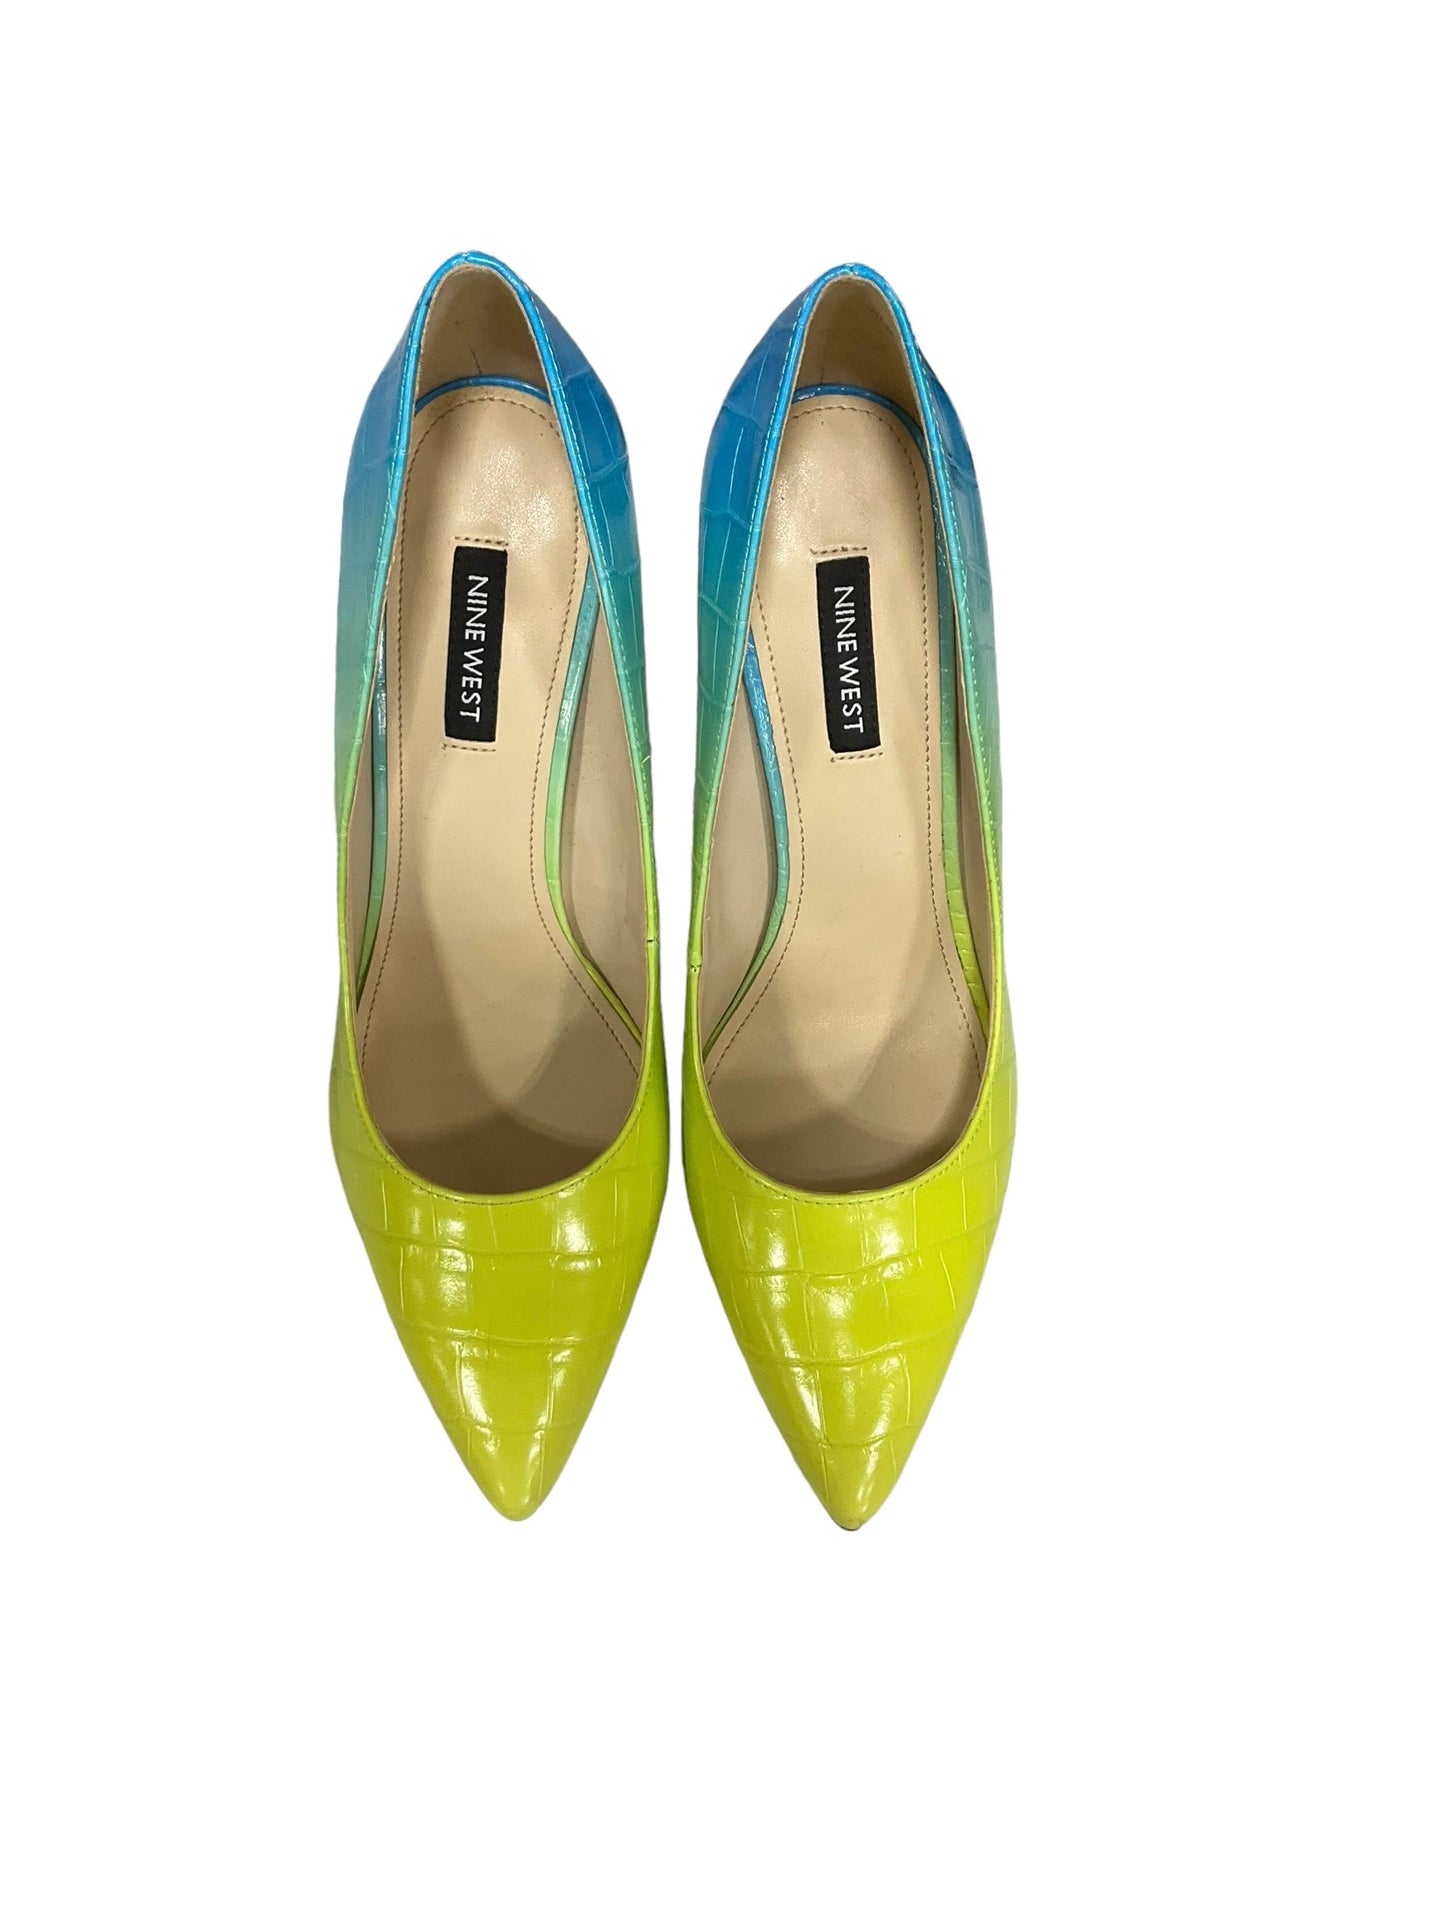 Blue & Green Shoes Heels Stiletto Nine West Apparel, Size 8.5